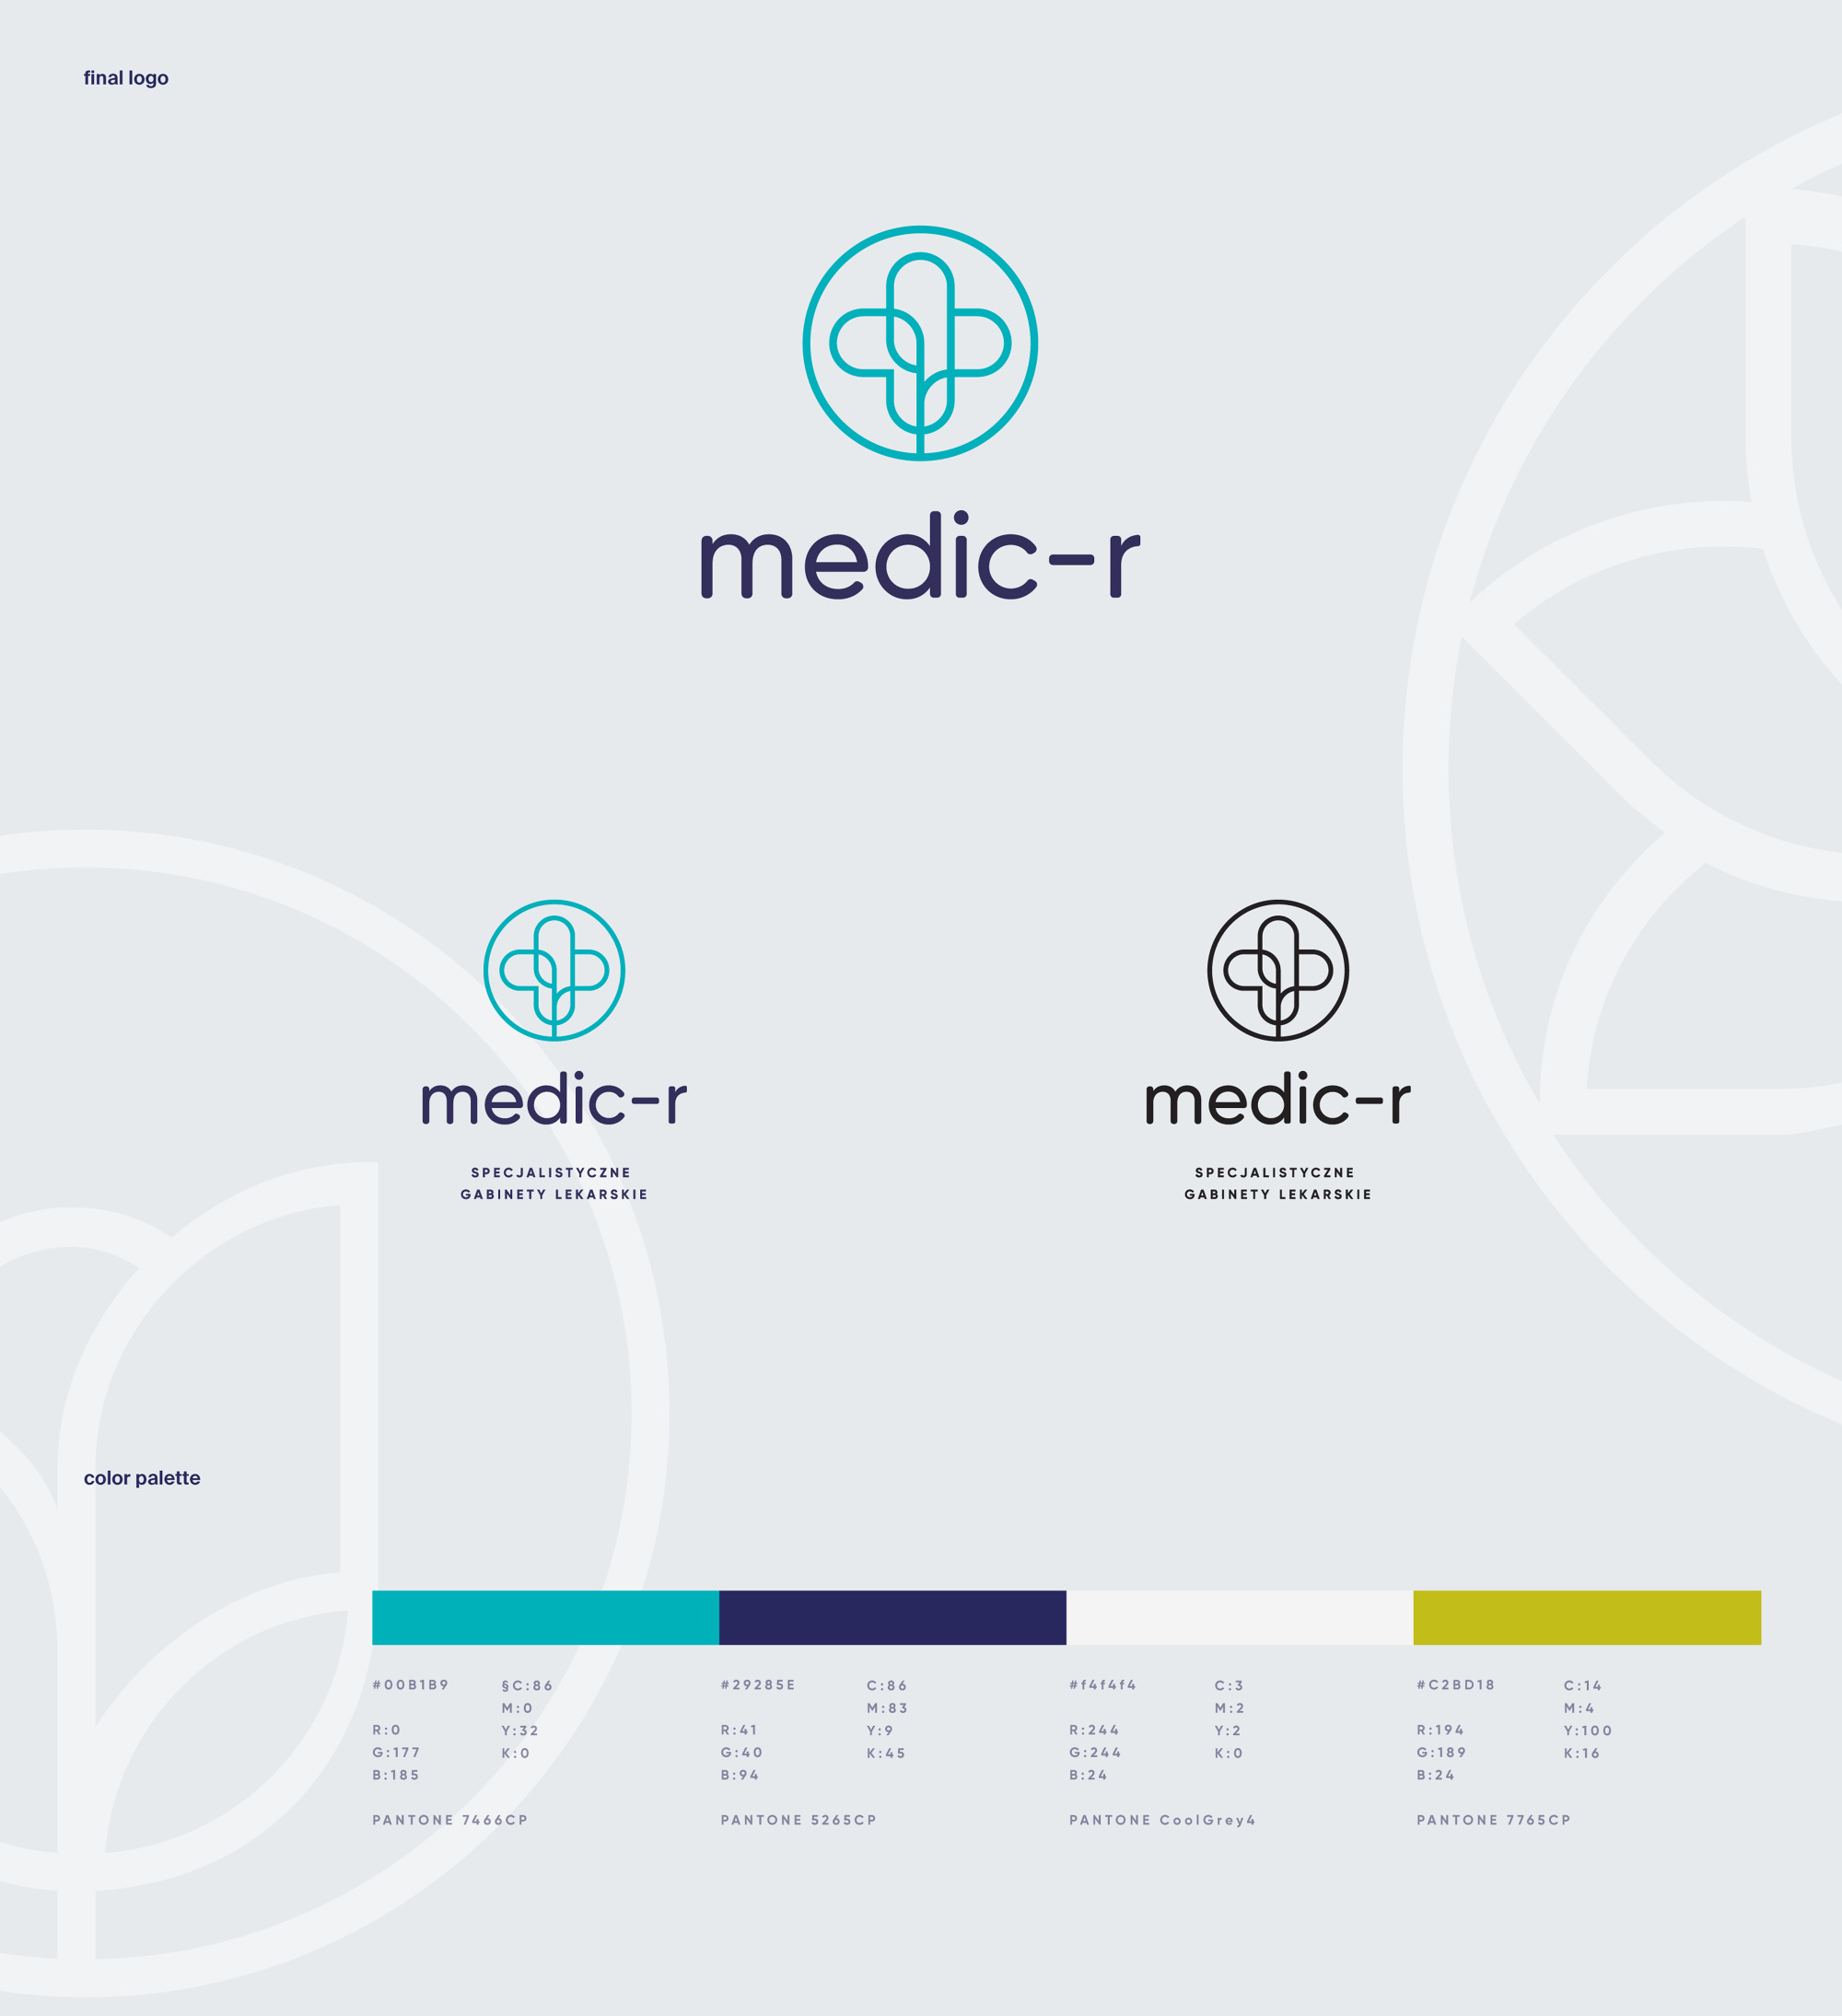 MEDIC-R 私人诊所品牌标识设计©Uniforma